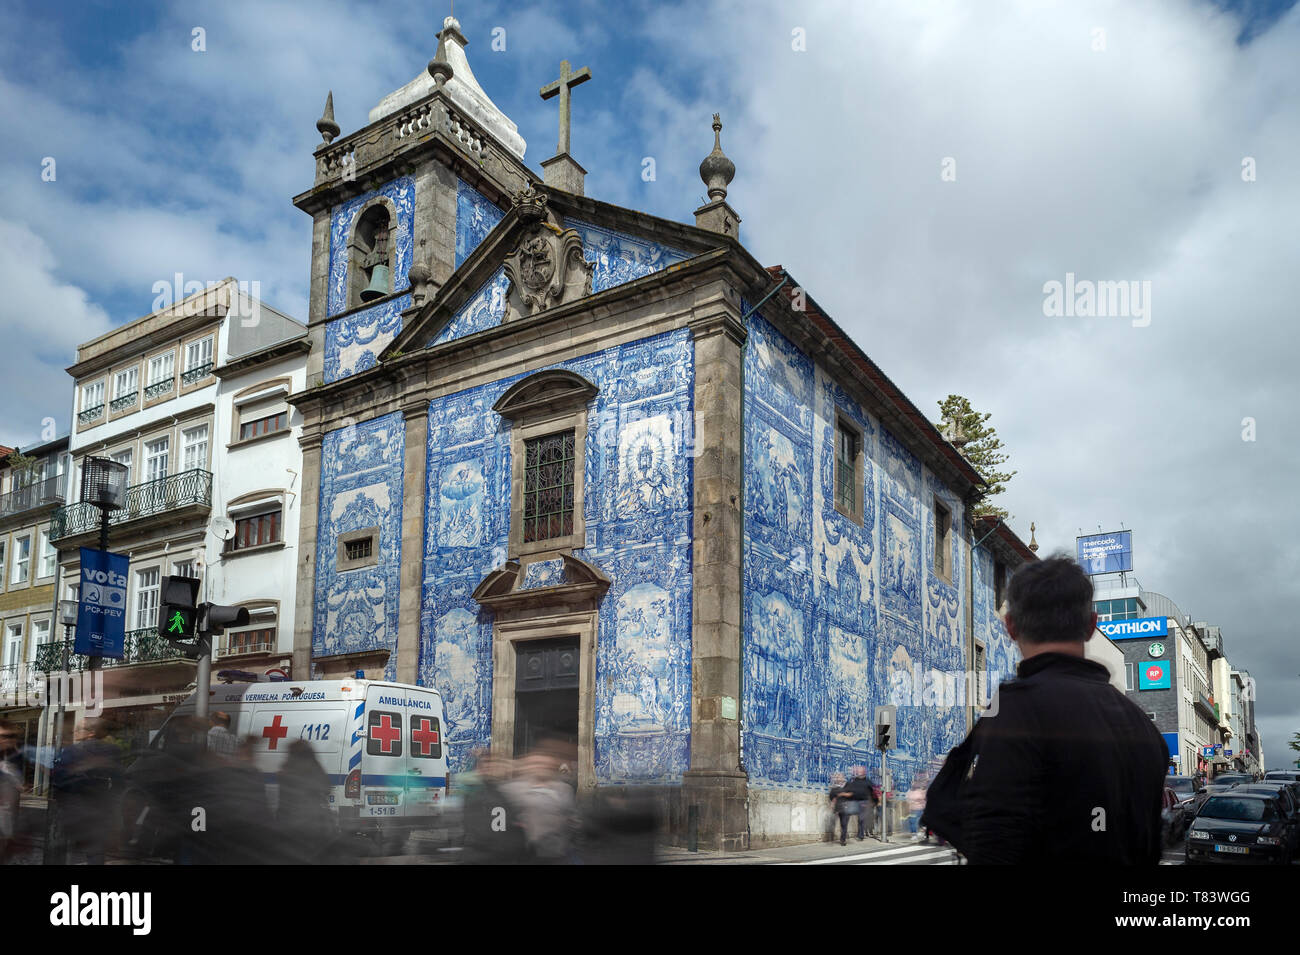 Capela das Almas Church in Porto, Portugal. Blue azulejo tiled exterior facade with blurred people. Stock Photo